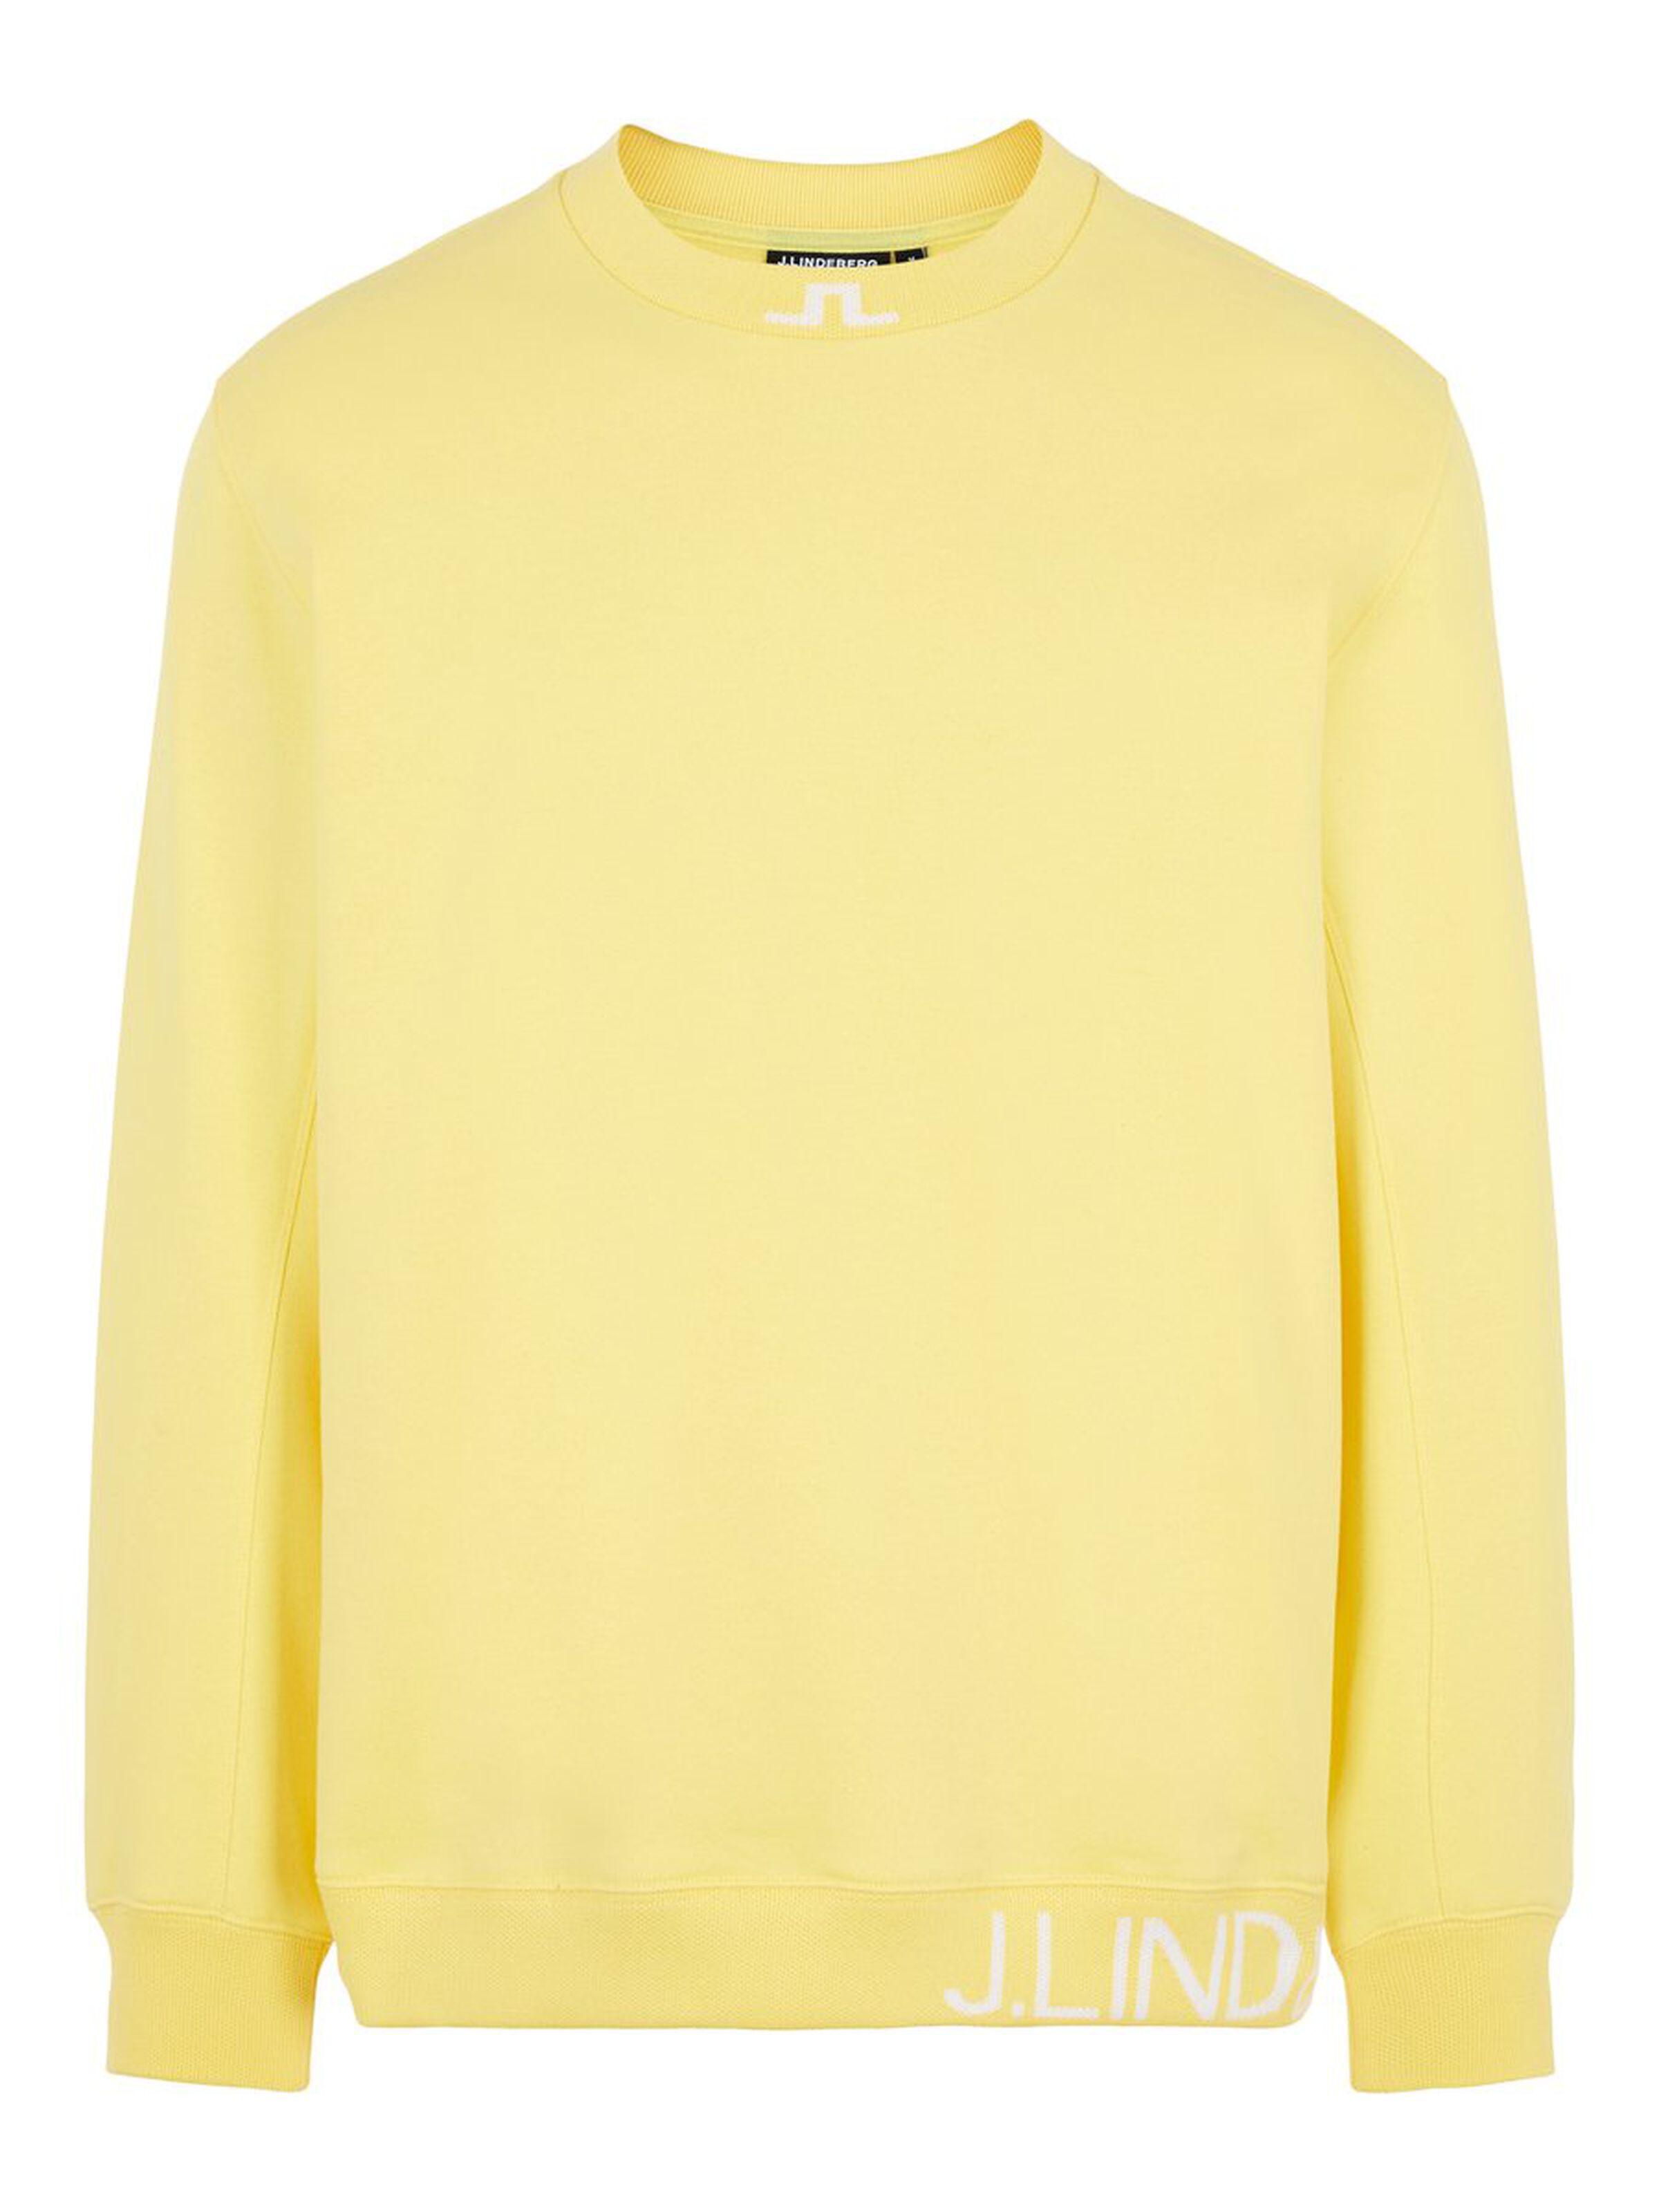 Old Ridel sweatshirt HERREN Pullovers & Sweatshirts NO STYLE Rabatt 96 % Grau XXL 